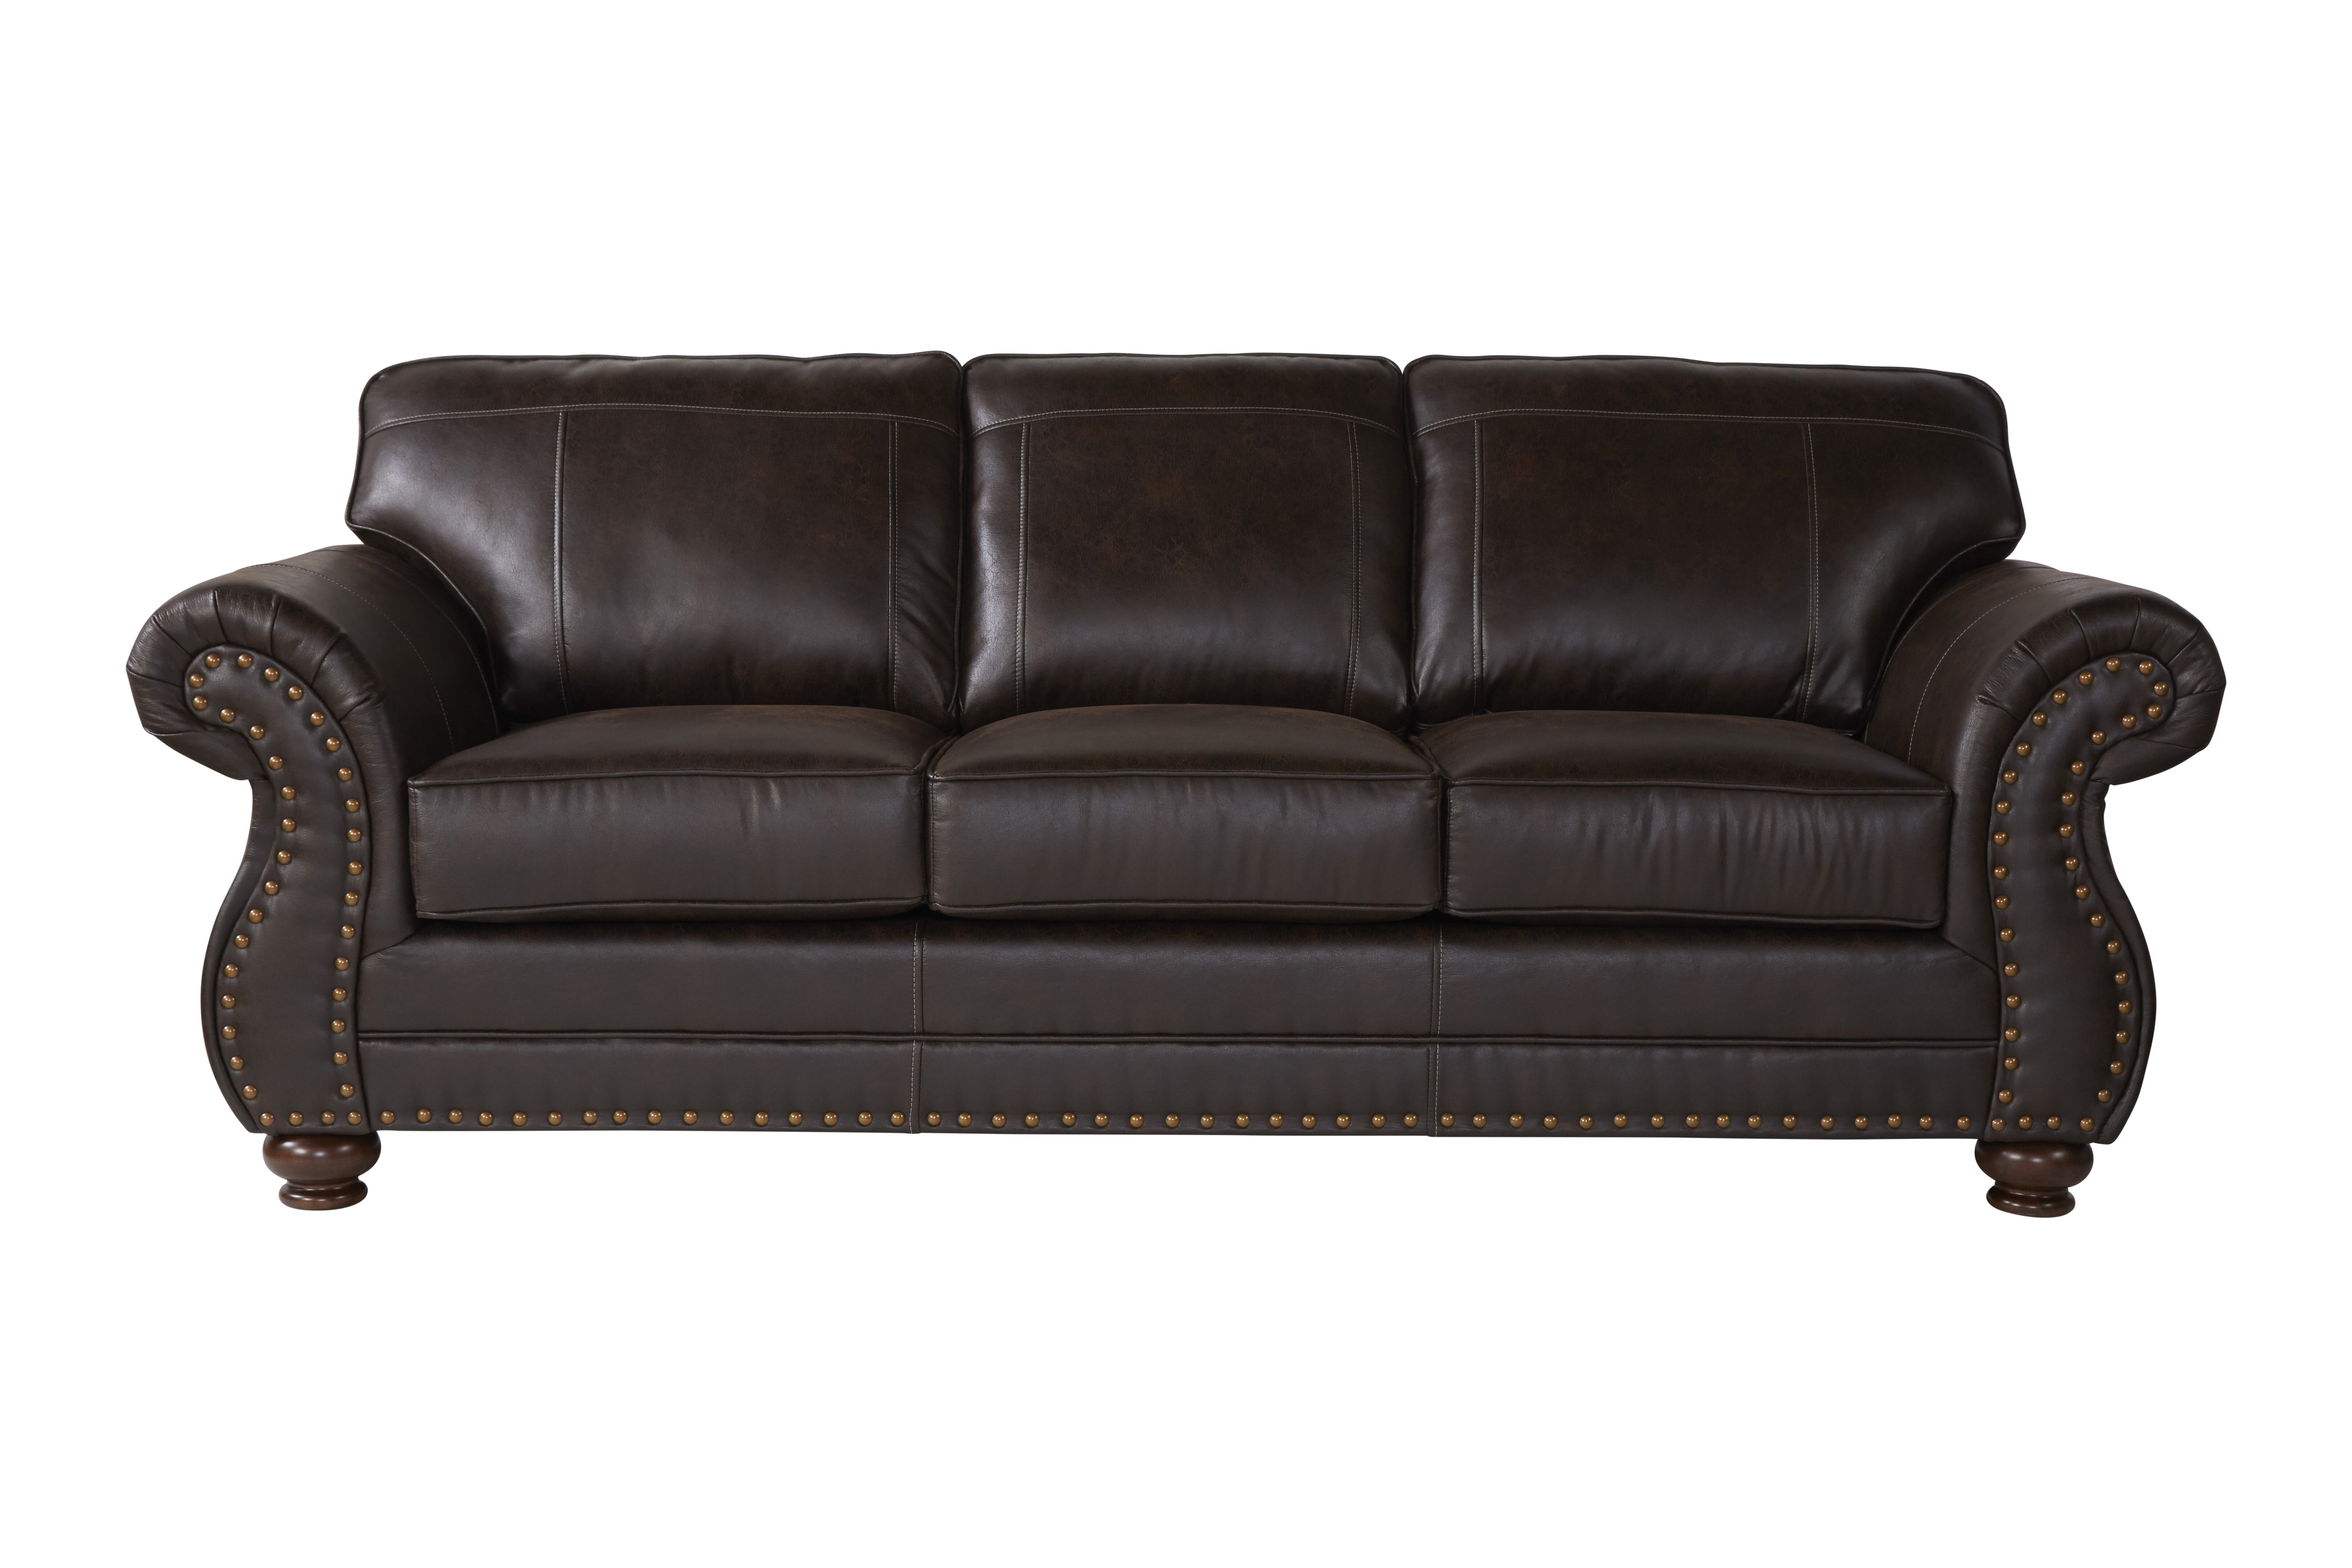 classic sofa set living room